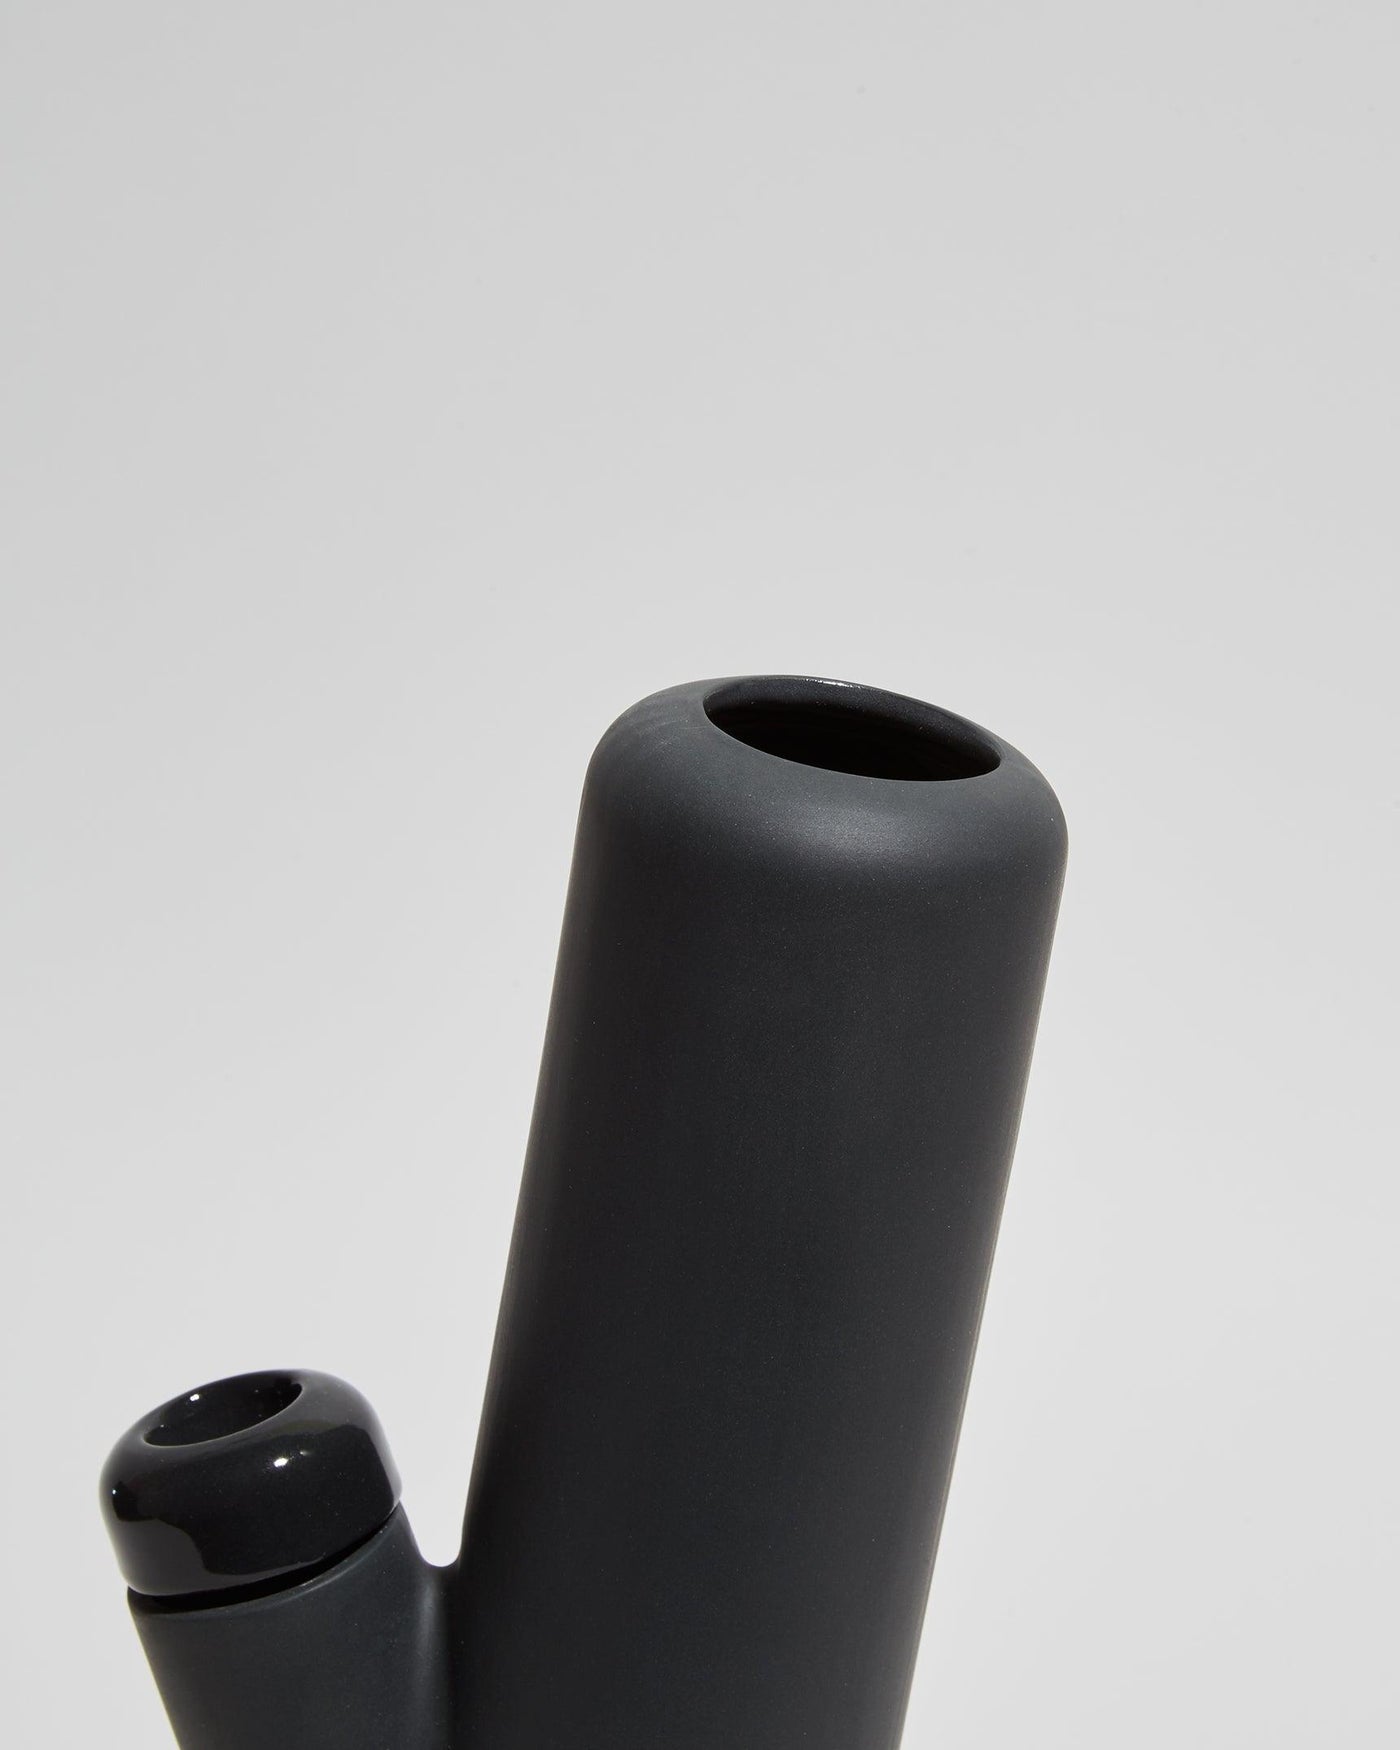 large mouth opening of black-color sleek ceramic bong